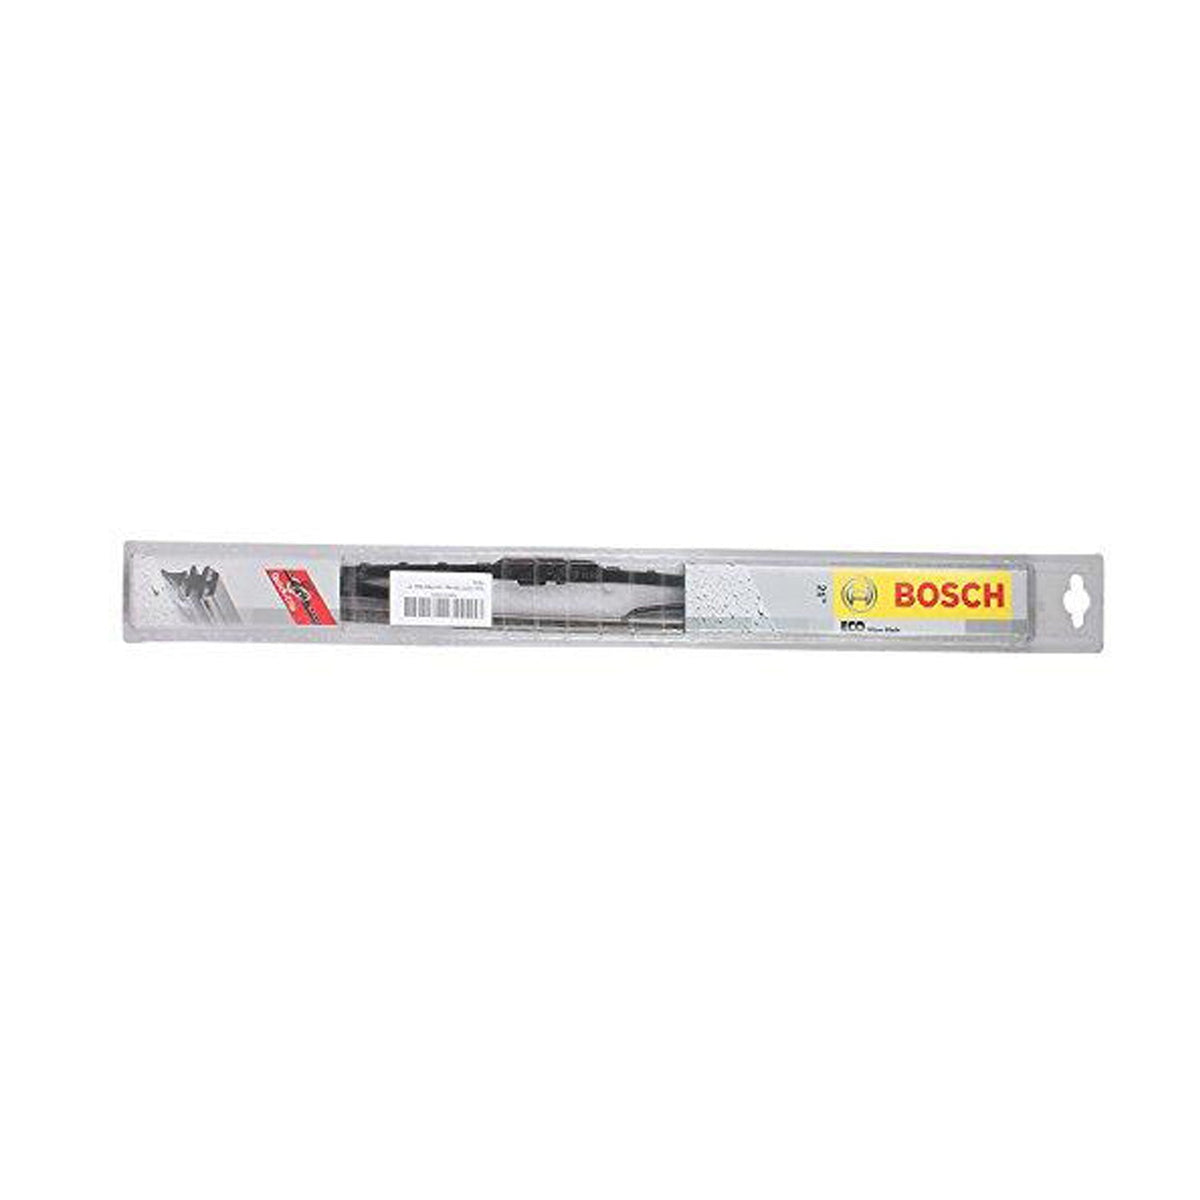 Bosch 3397011649 High Performance Replacement Wiper Blade, 21"